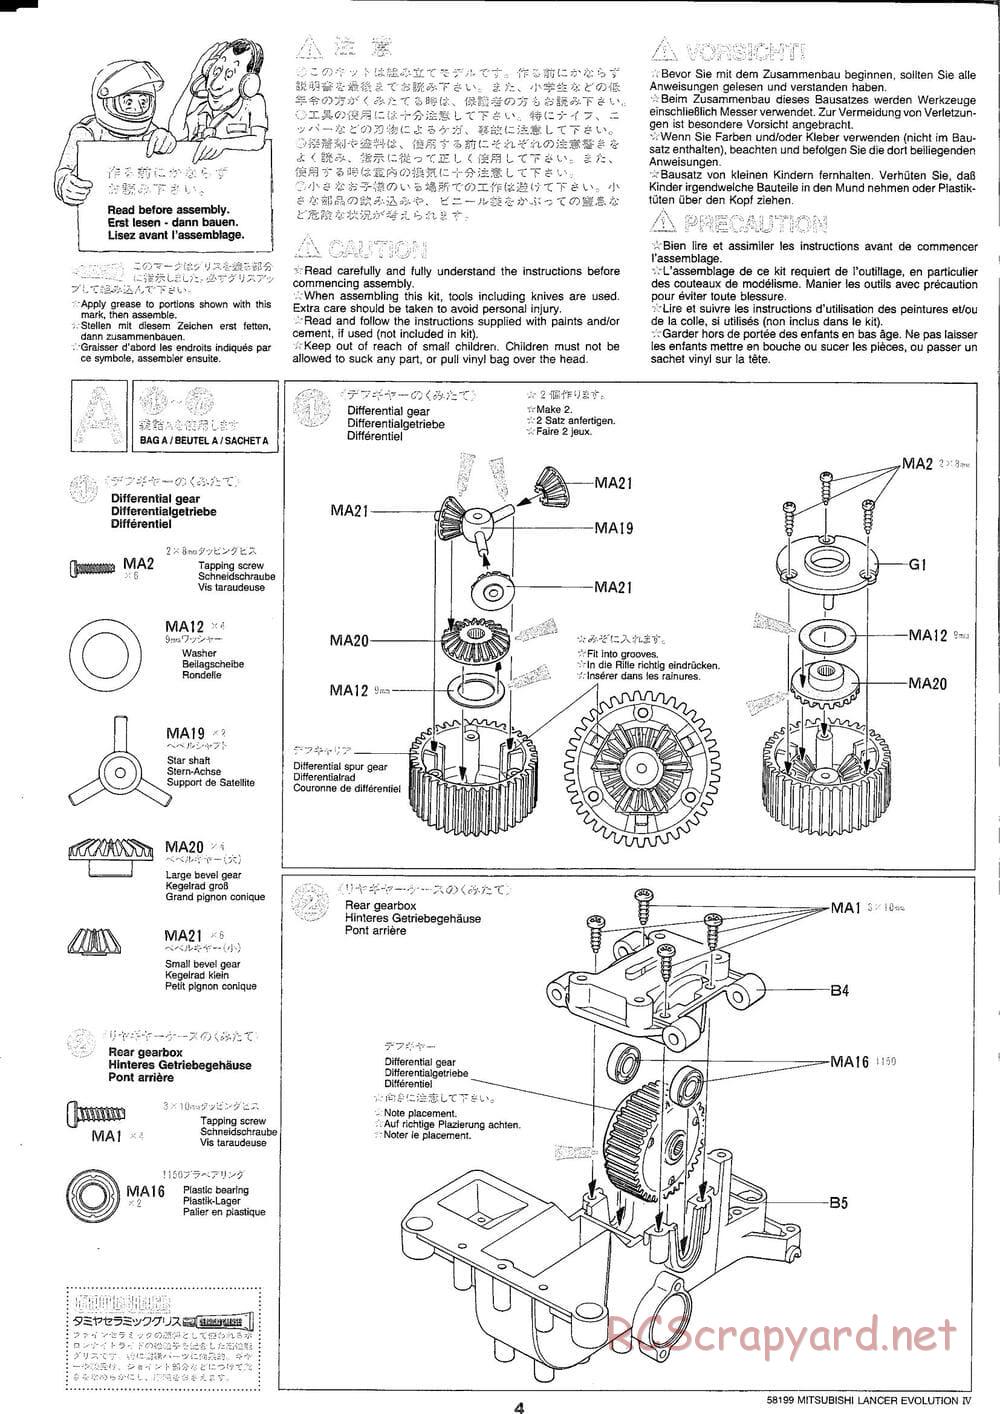 Tamiya - Mitsubishi Lancer Evolution IV - TA-03F Chassis - Manual - Page 4